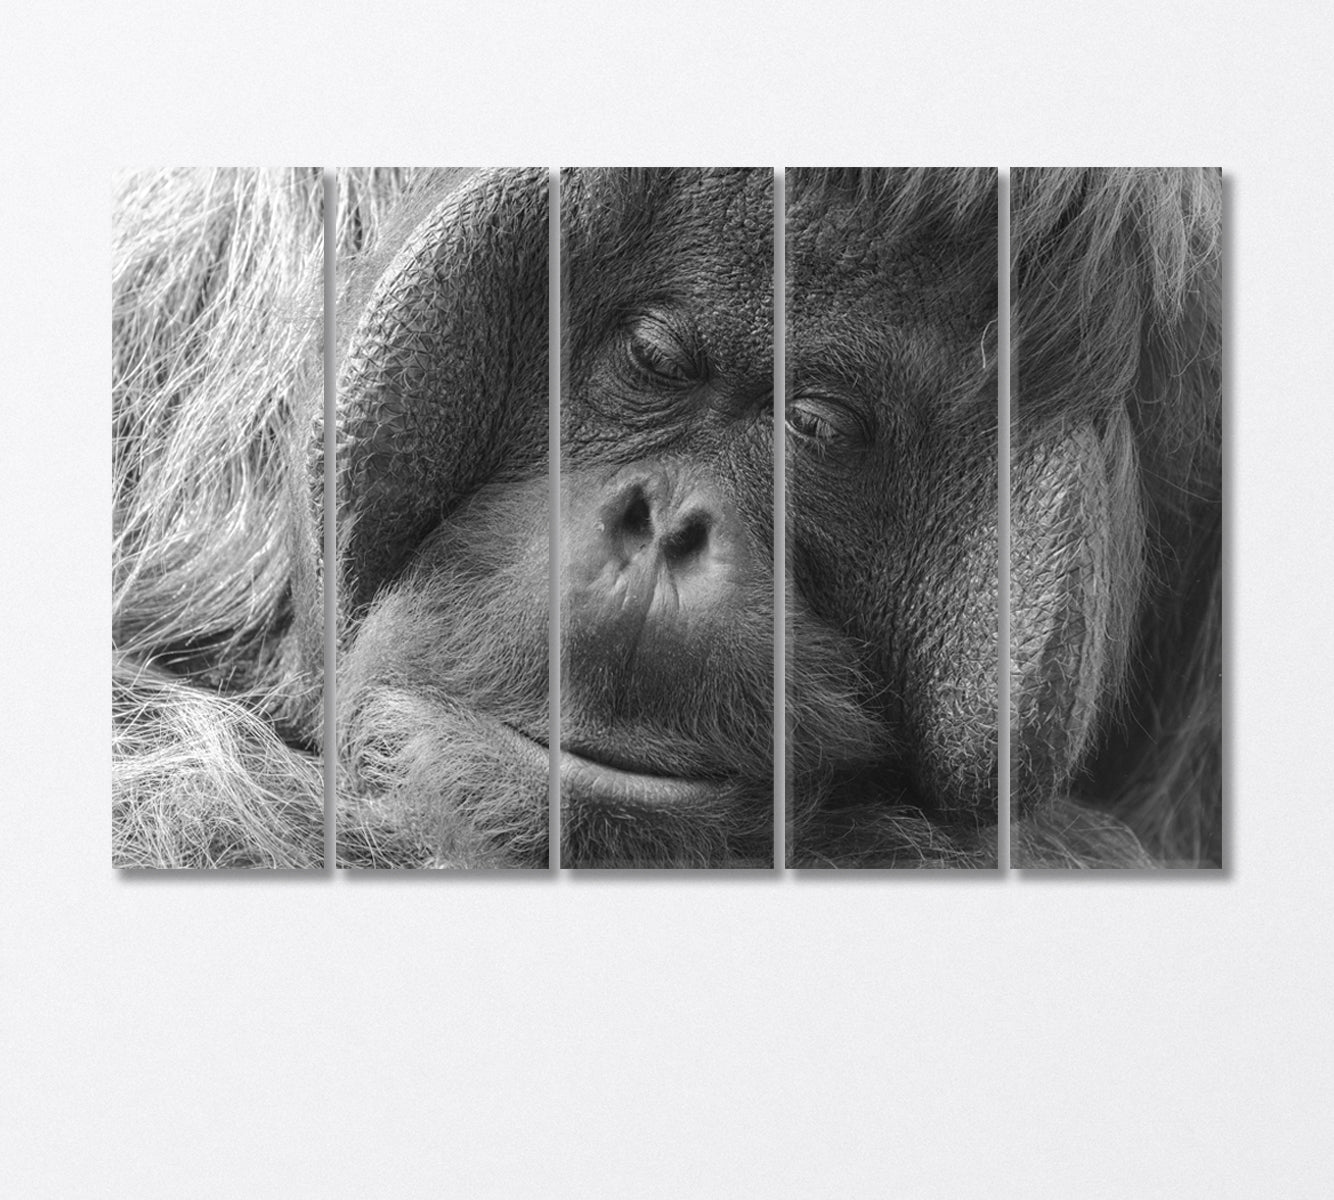 Orangutan in Black and White Canvas Print-Canvas Print-CetArt-5 Panels-36x24 inches-CetArt